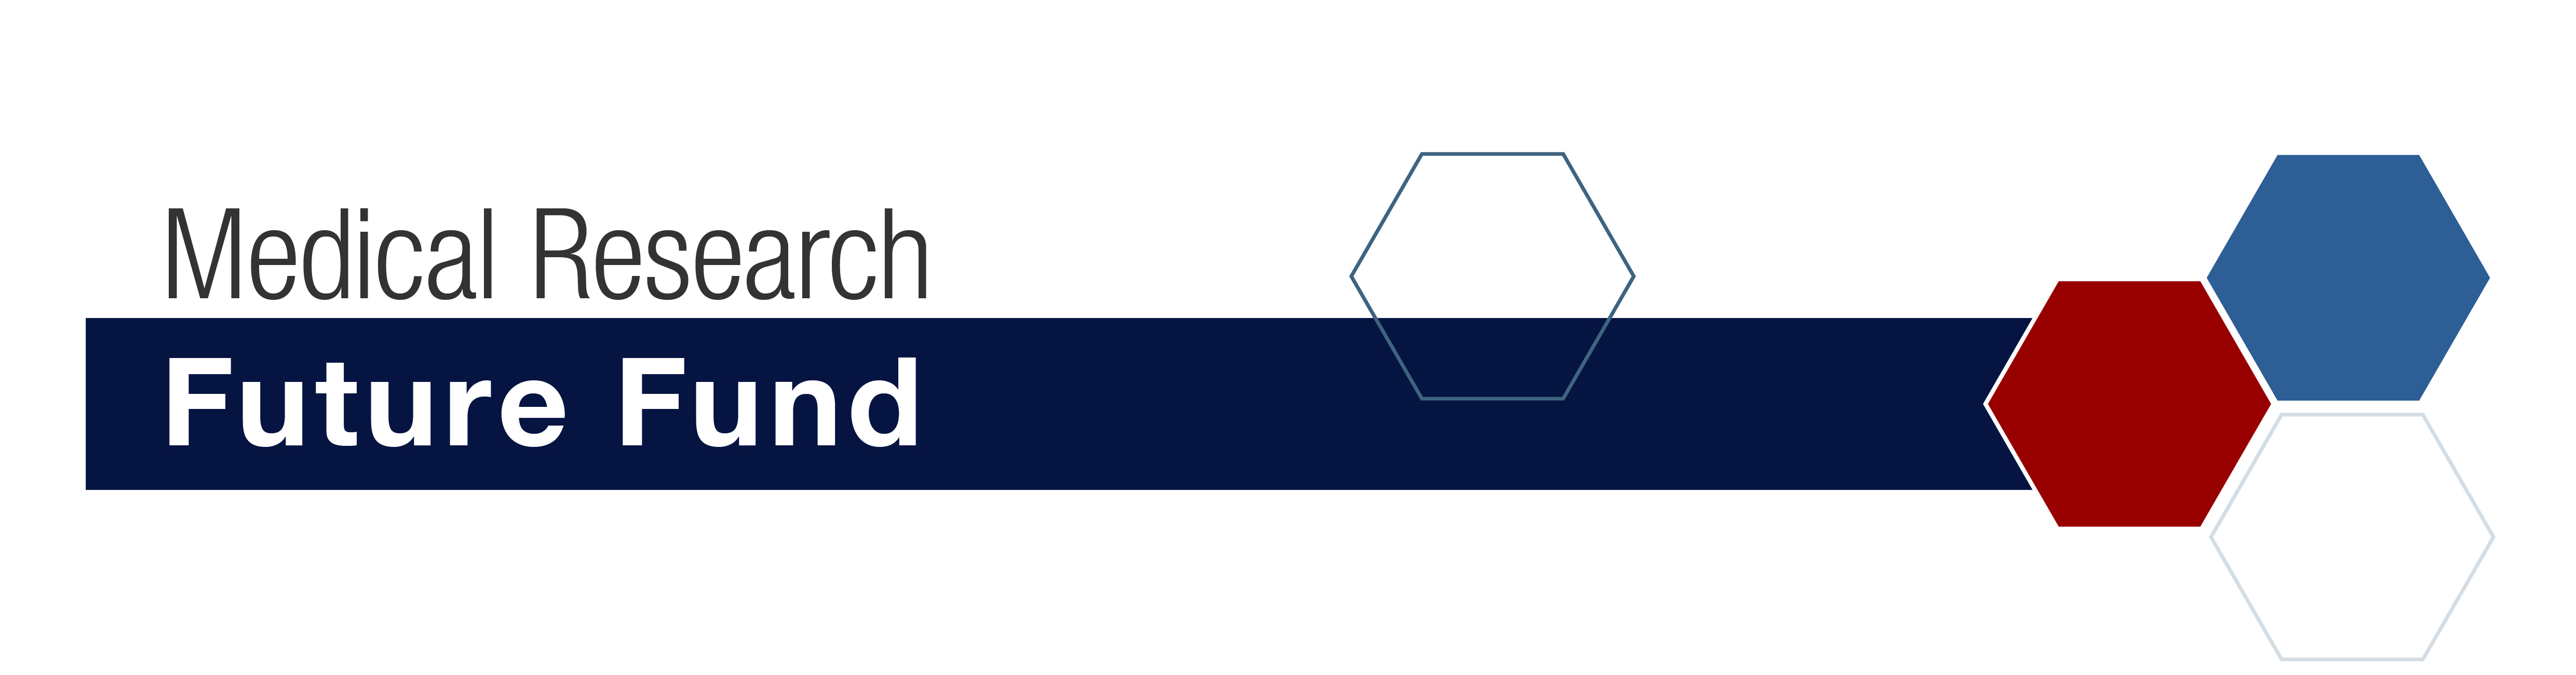 Medical Research Future Fund logo.jpg